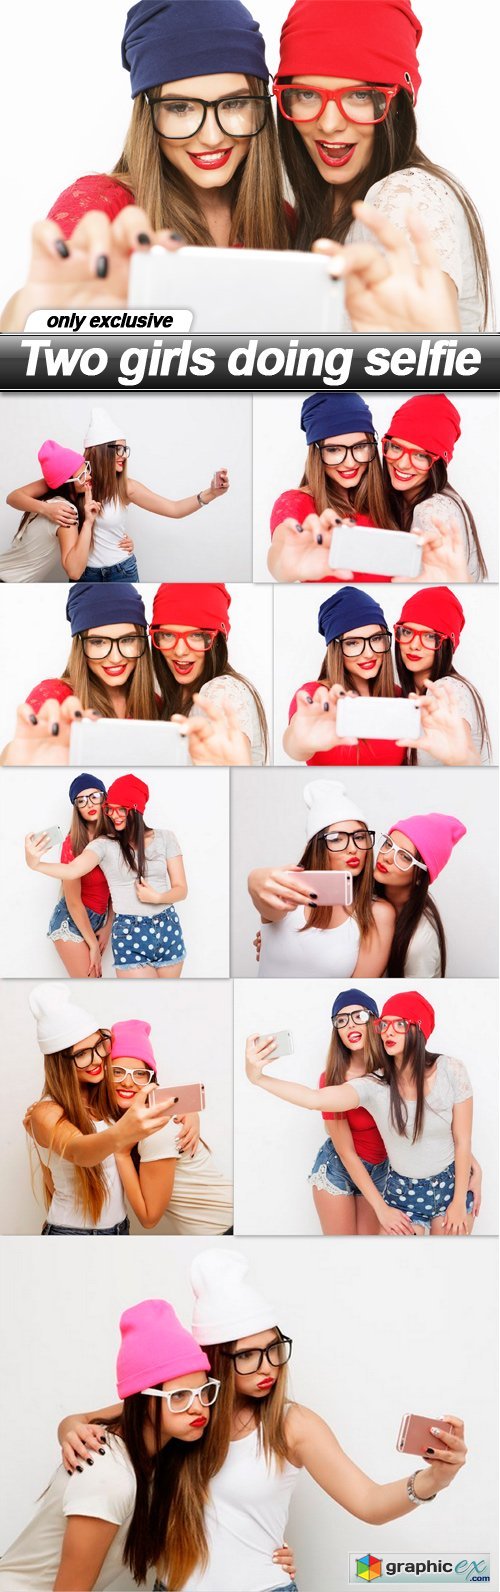 Two girls doing selfie - 9 UHQ JPEG